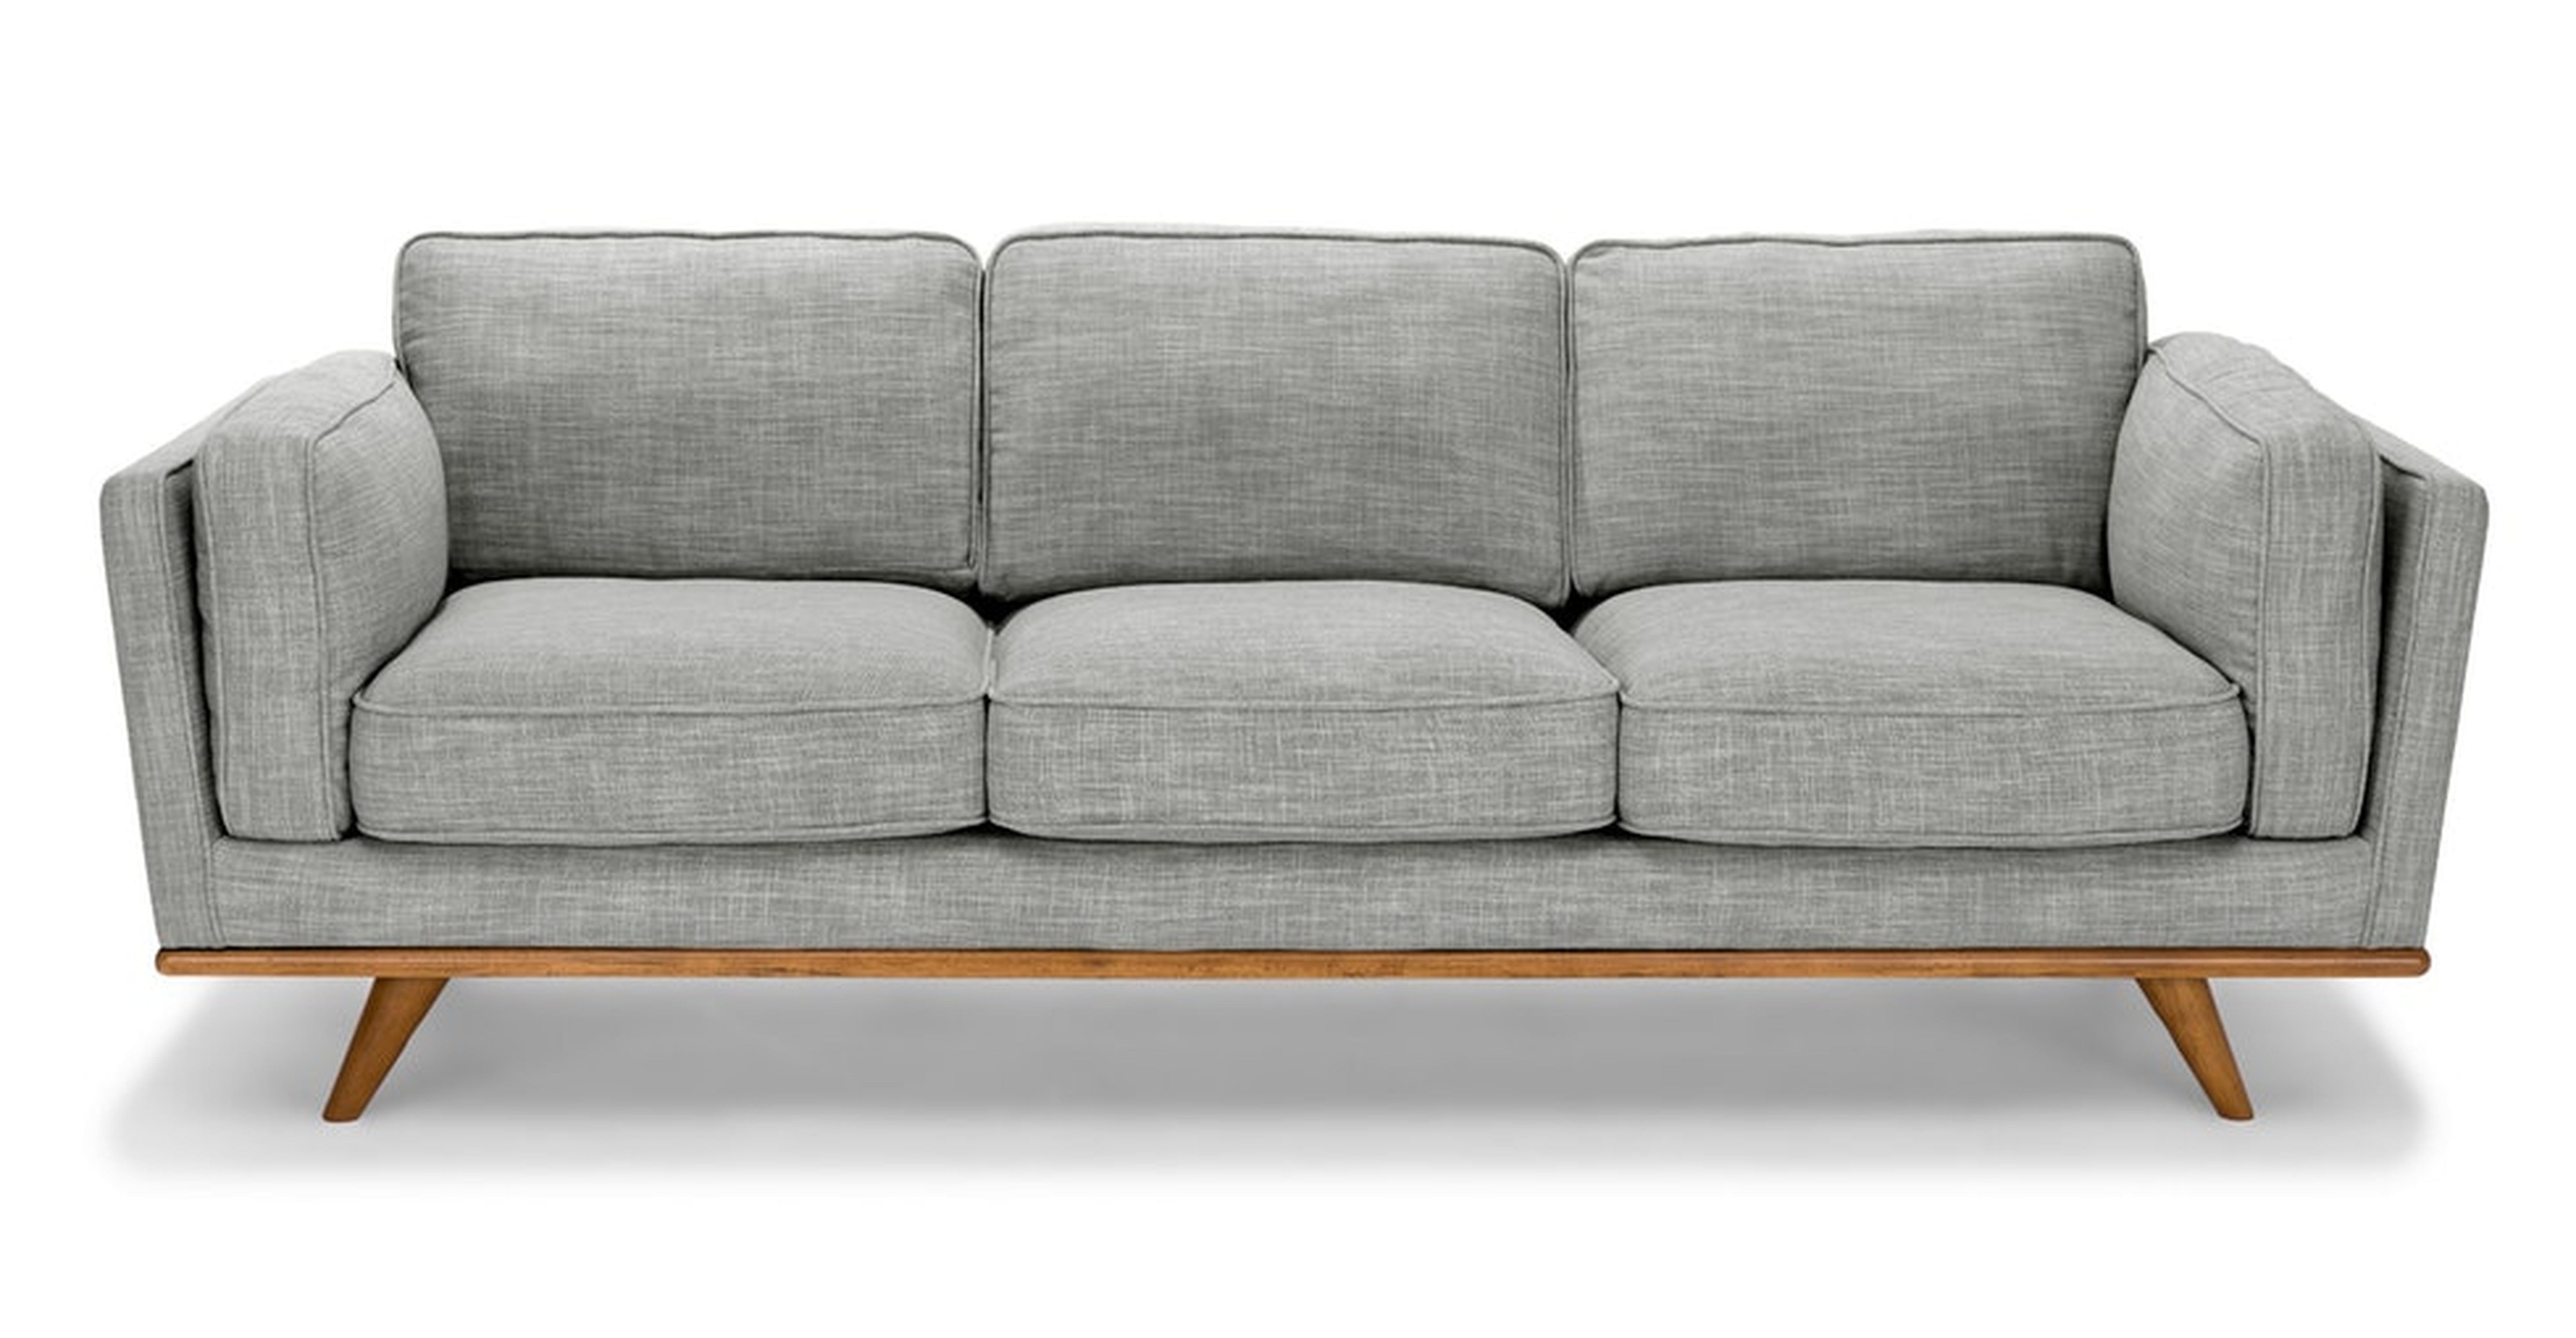 Timber 90" Sofa - Pebble Gray - Article